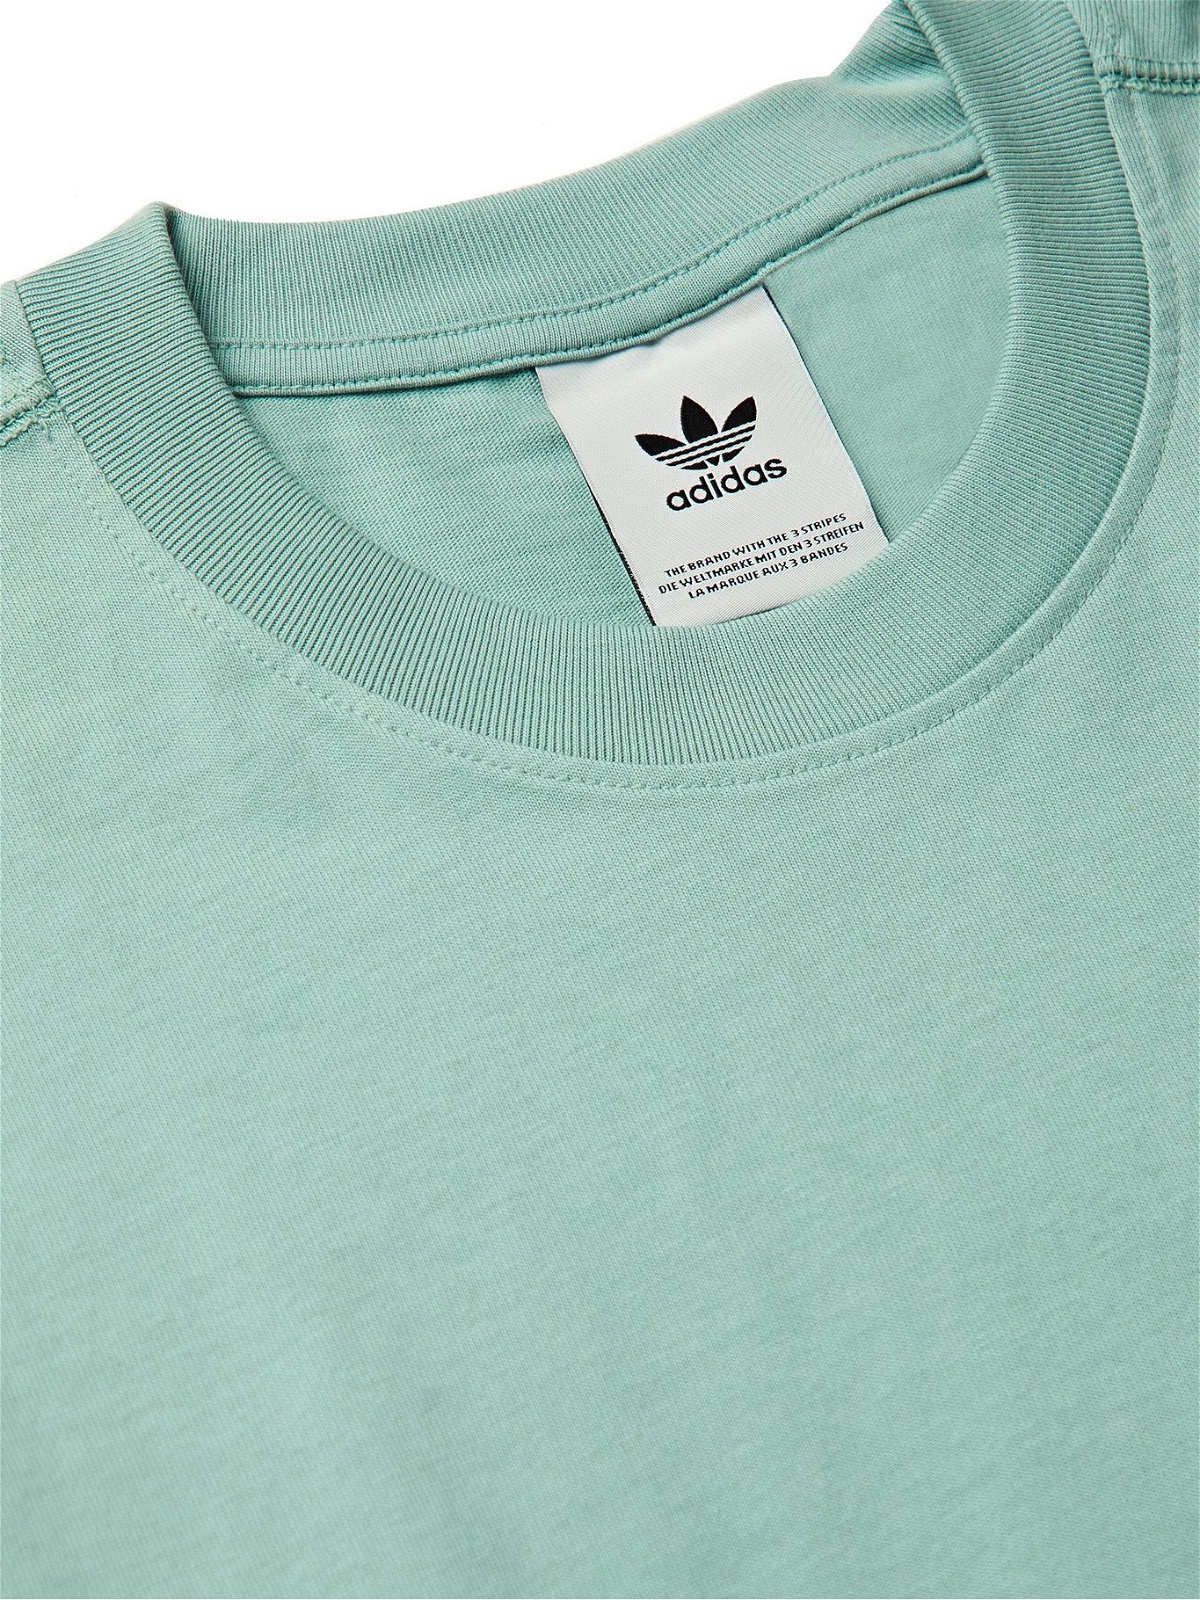 ADIDAS ORIGINALS - T-Shirt Originals Premium Cotton-Jersey Organic Green Logo-Appliquéd - Adicolor adidas